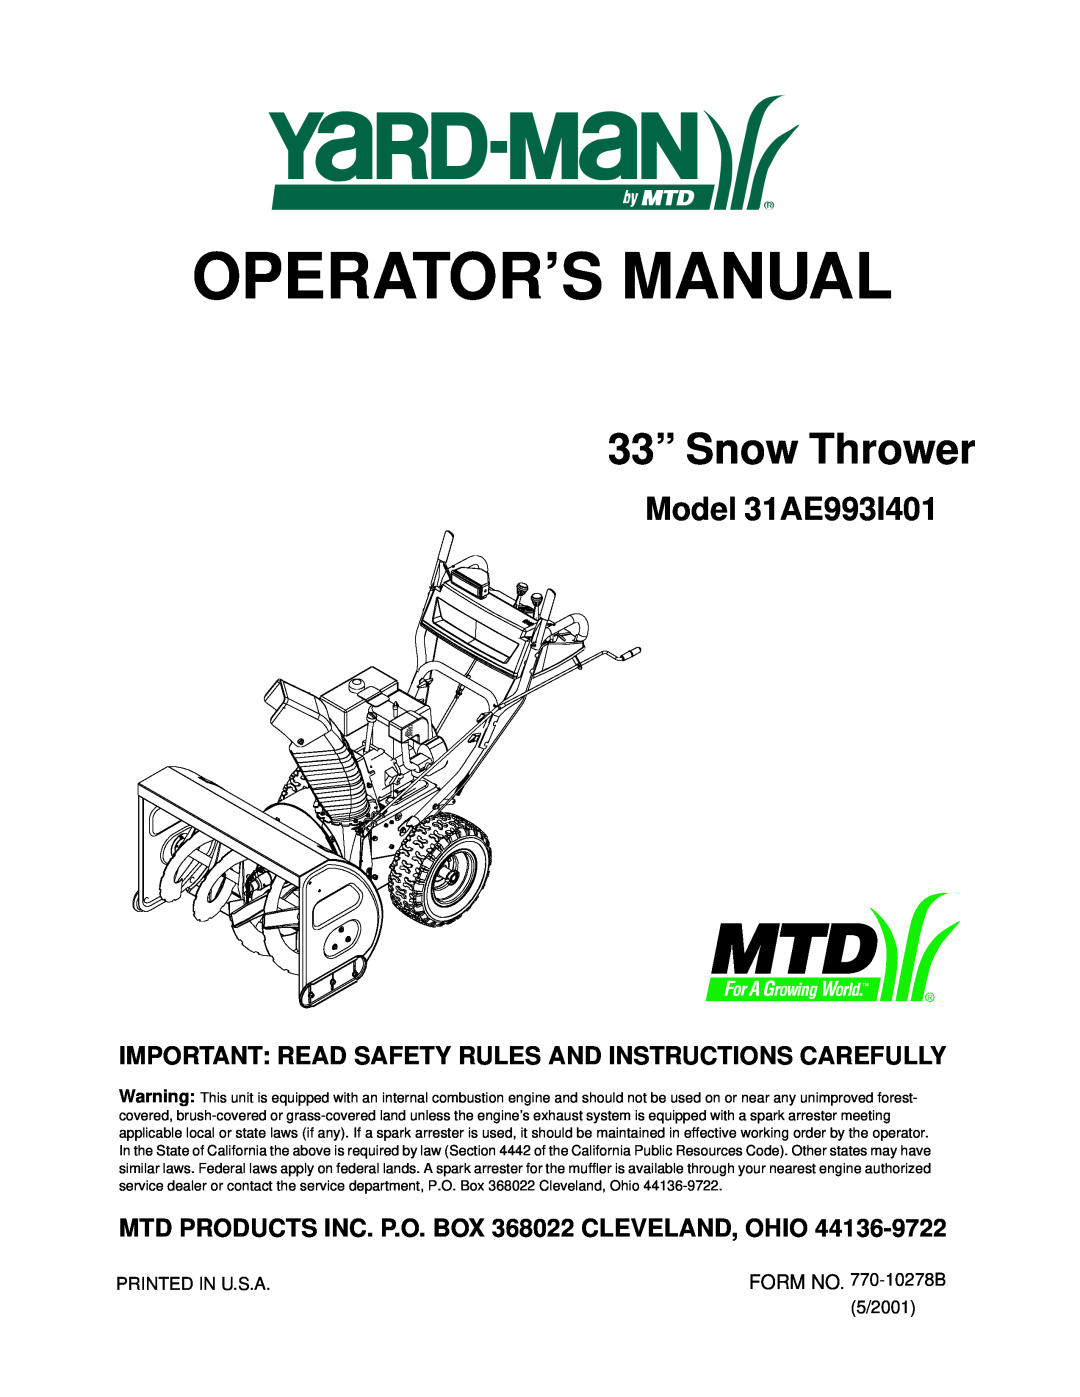 Yard-Man manual Model 31AE993I401, Operator’S Manual, 33” Snow Thrower 